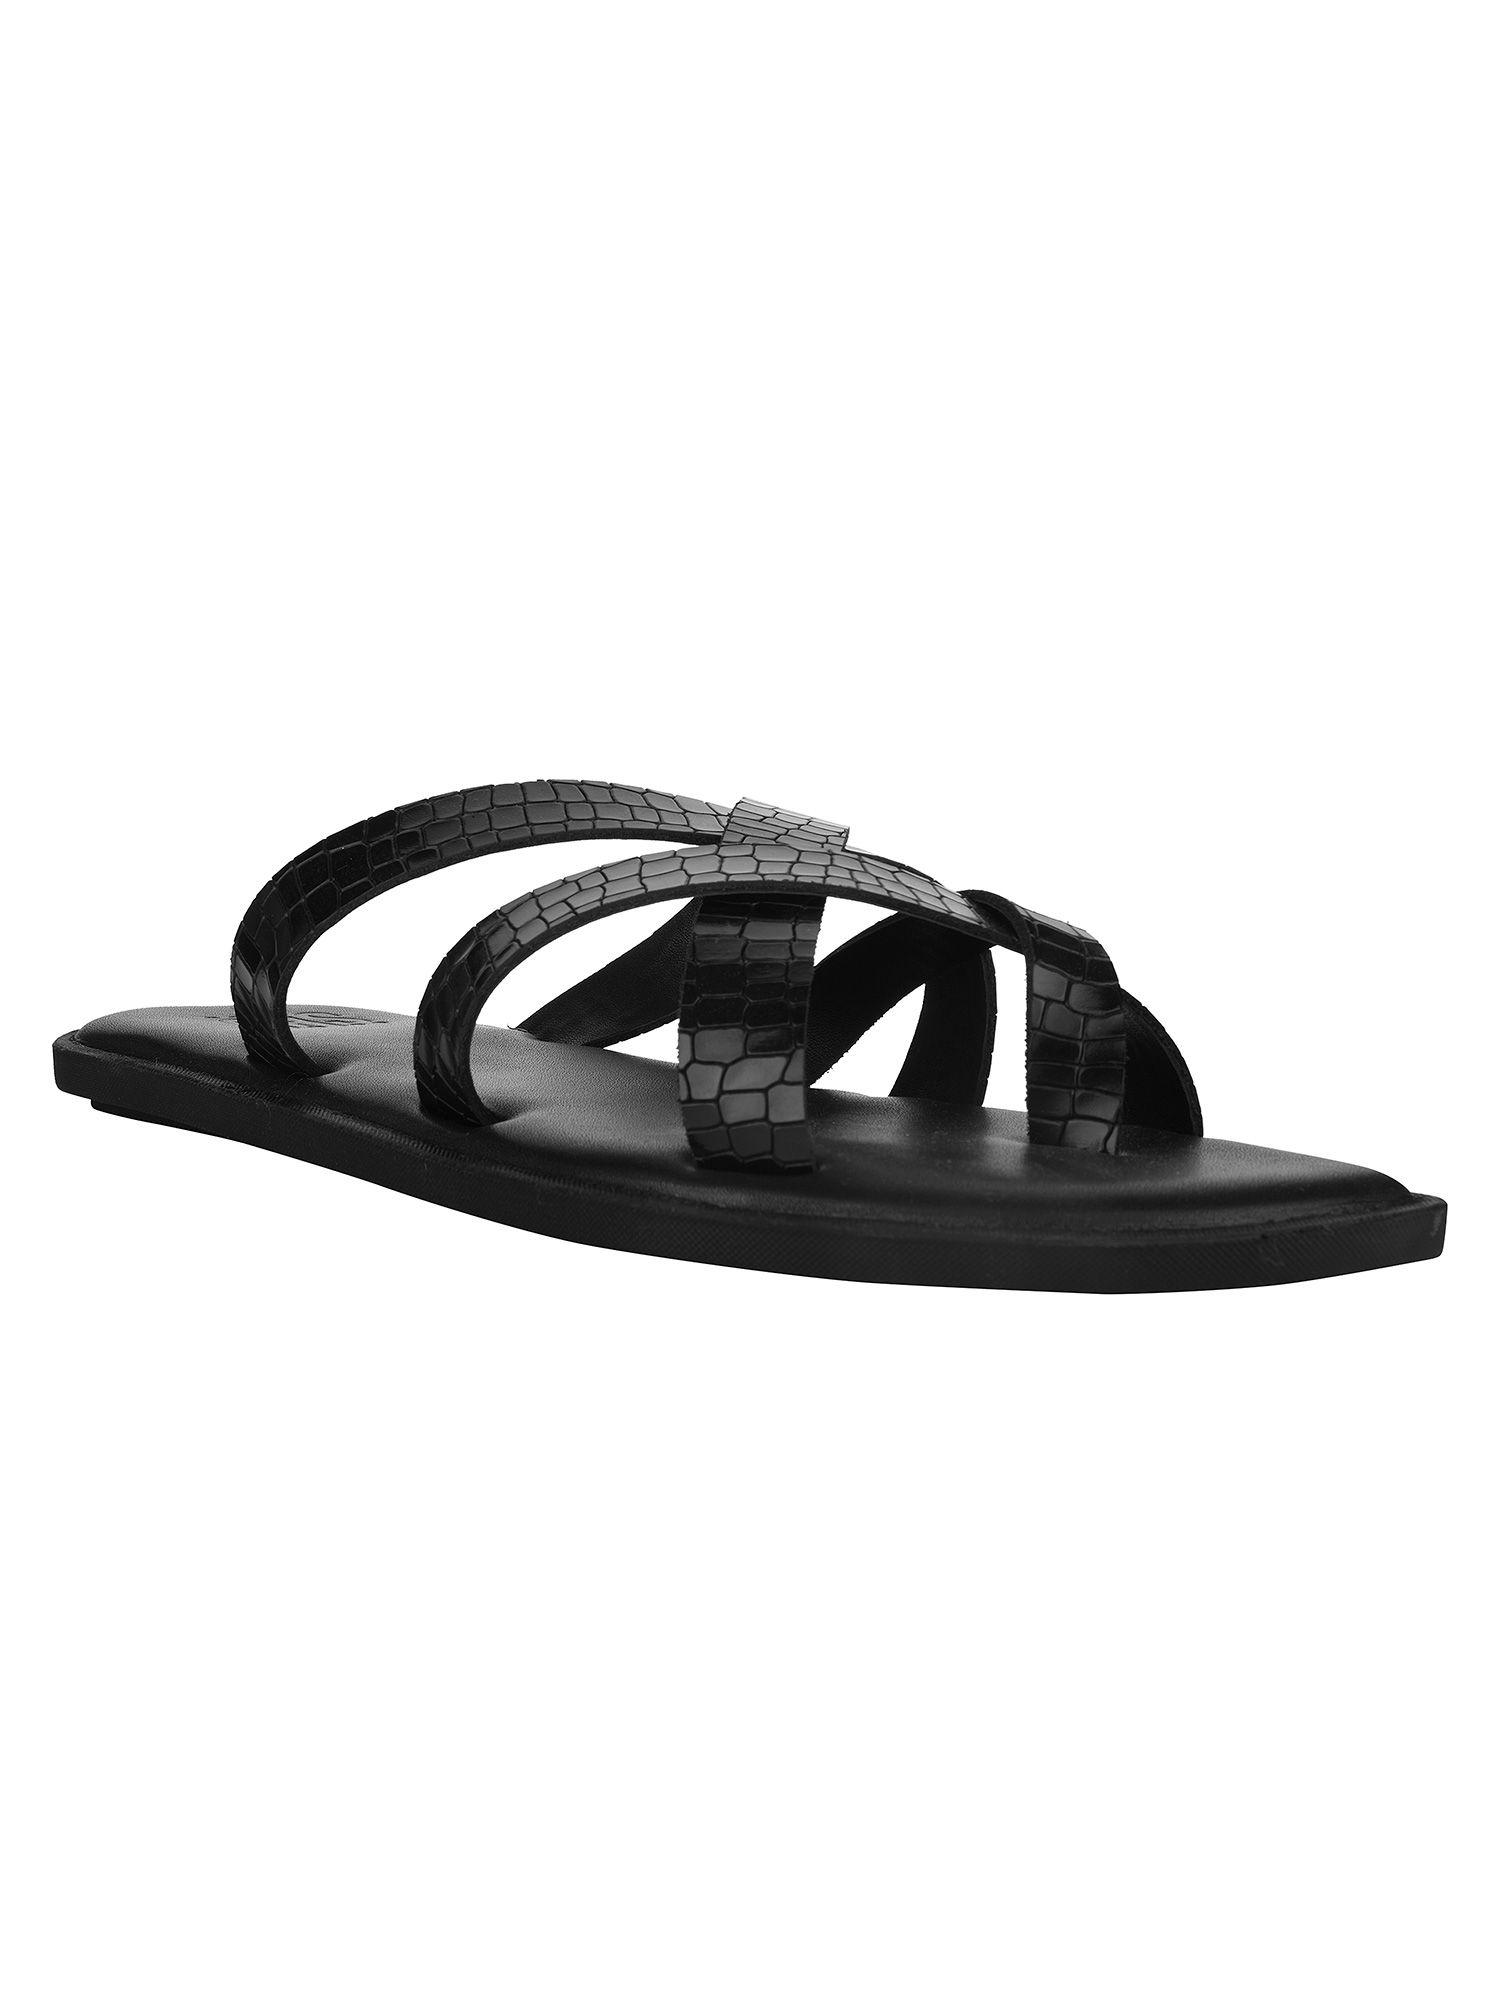 textured salvadore black sandals